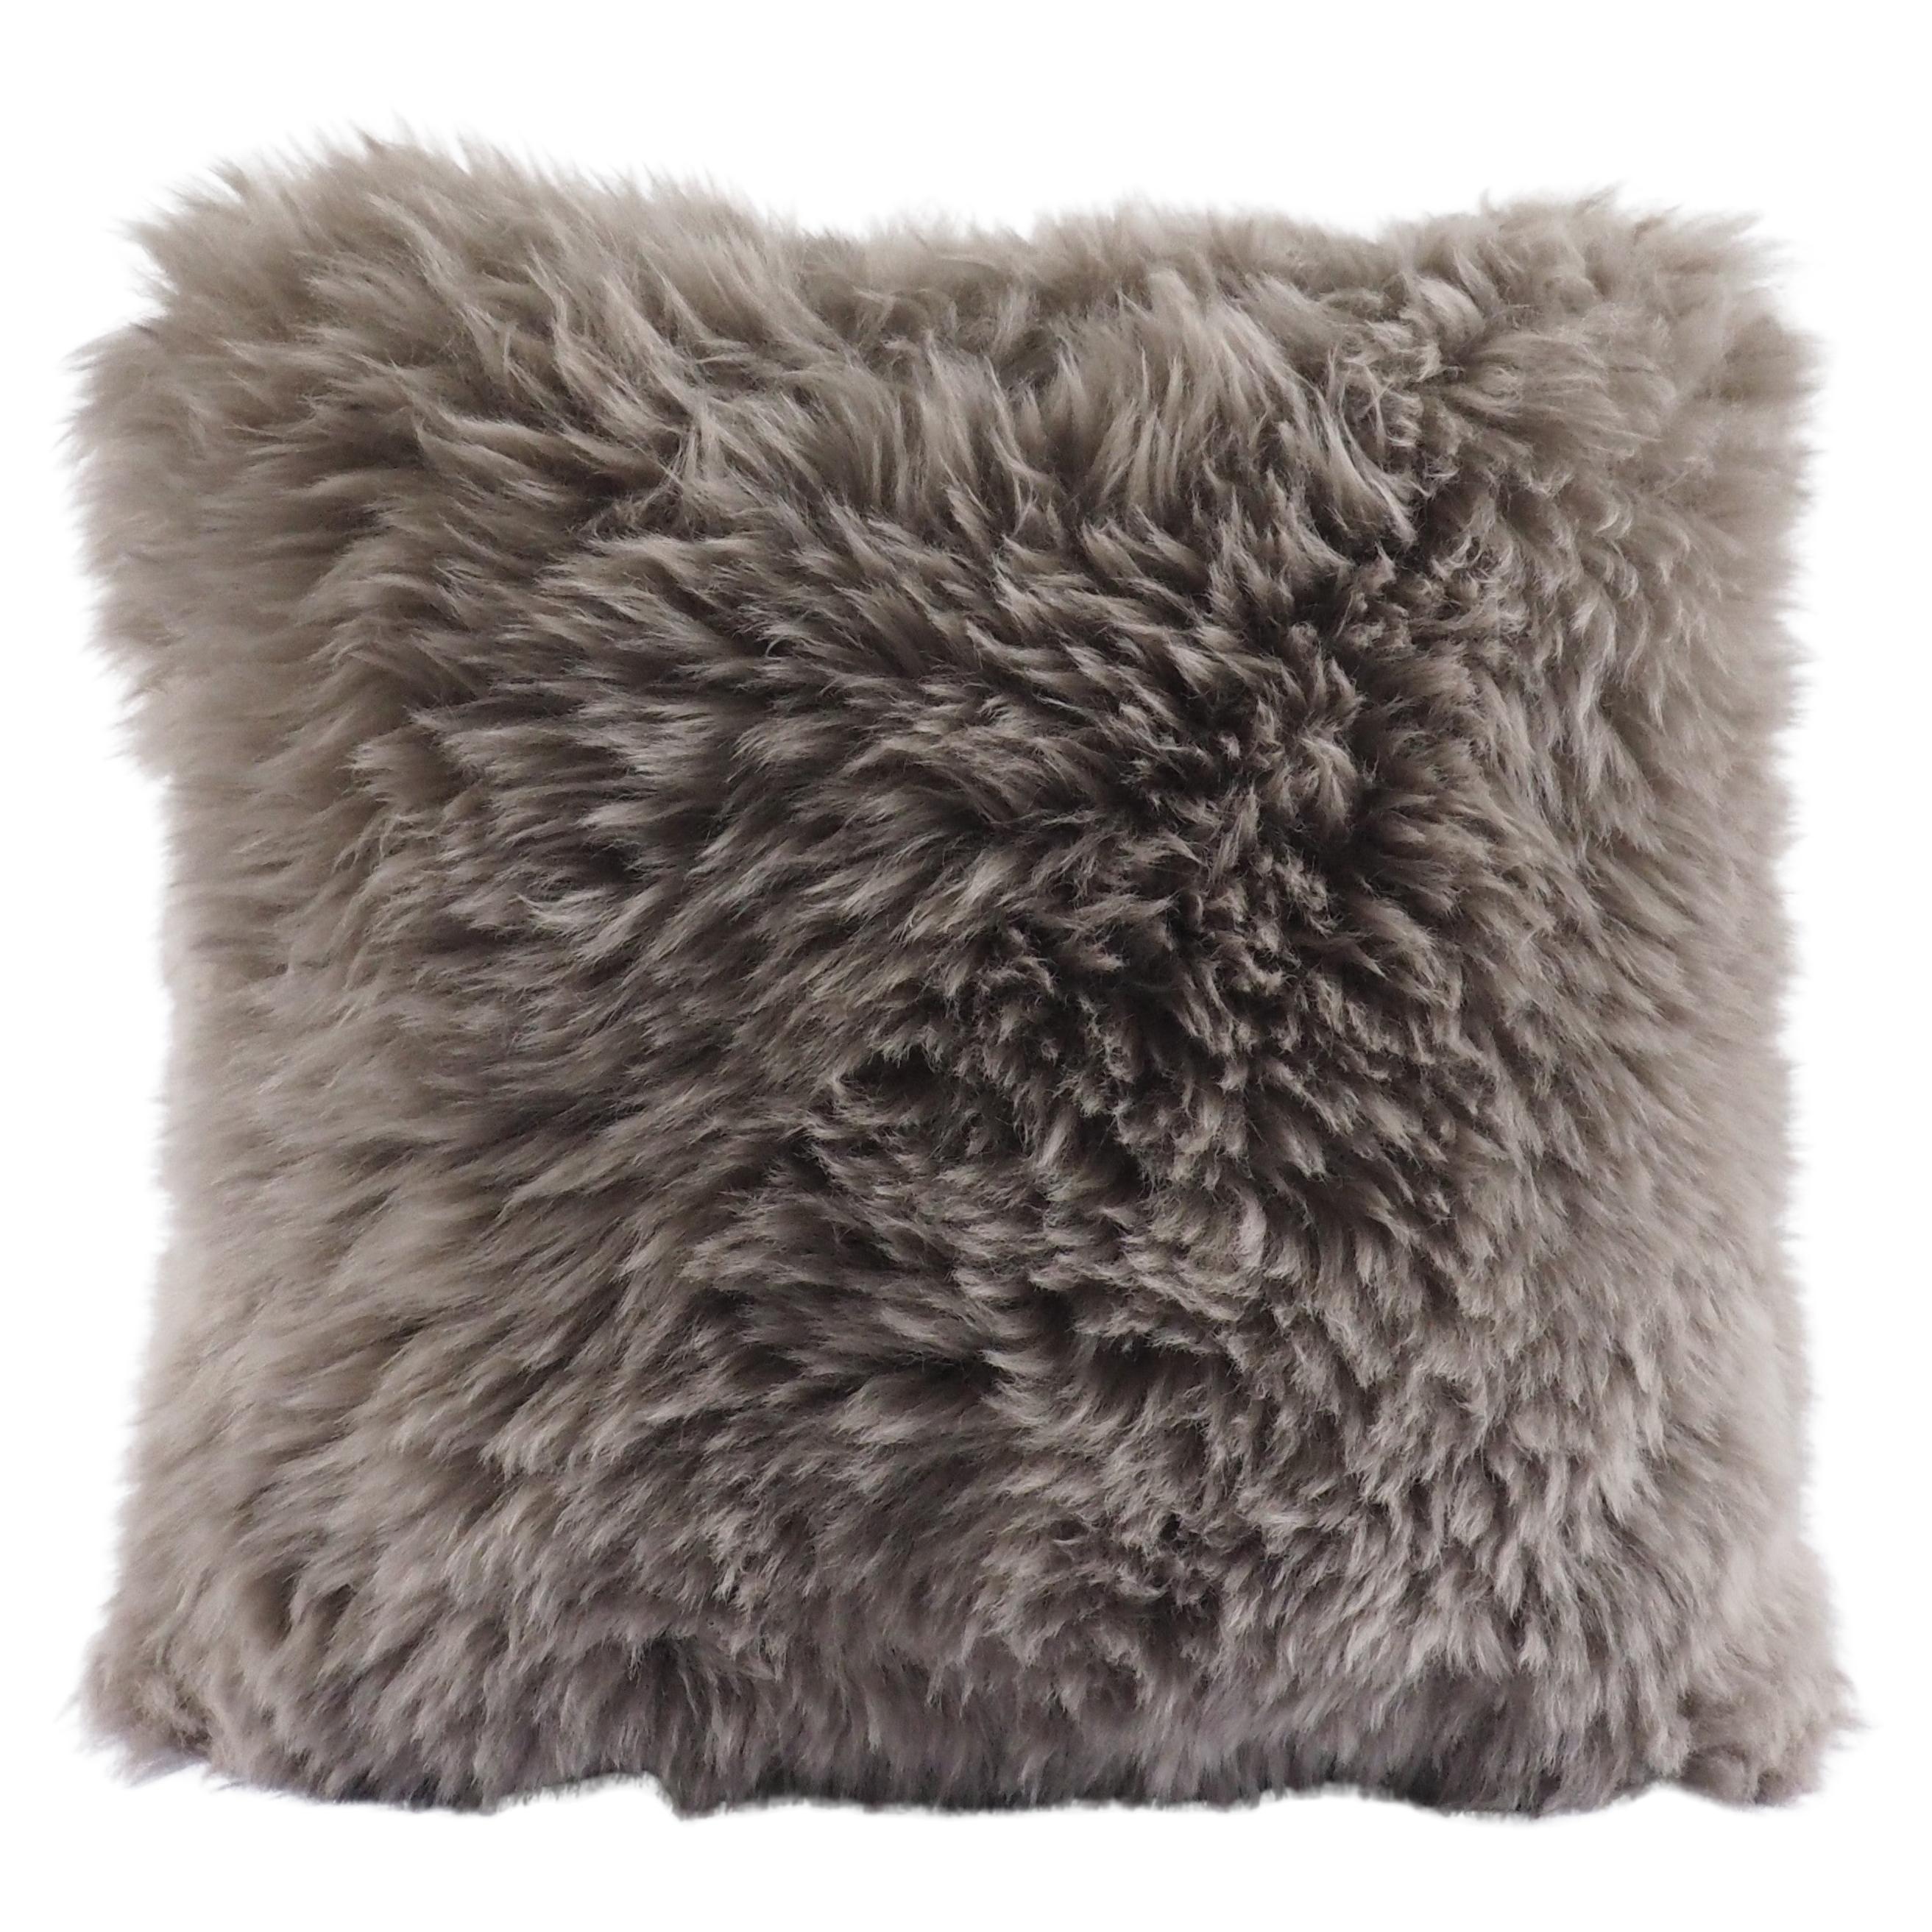 Moonstone Dark Cachà Shearling Sheepskin Pillow Fluffy Cushion by Muchi Decor For Sale